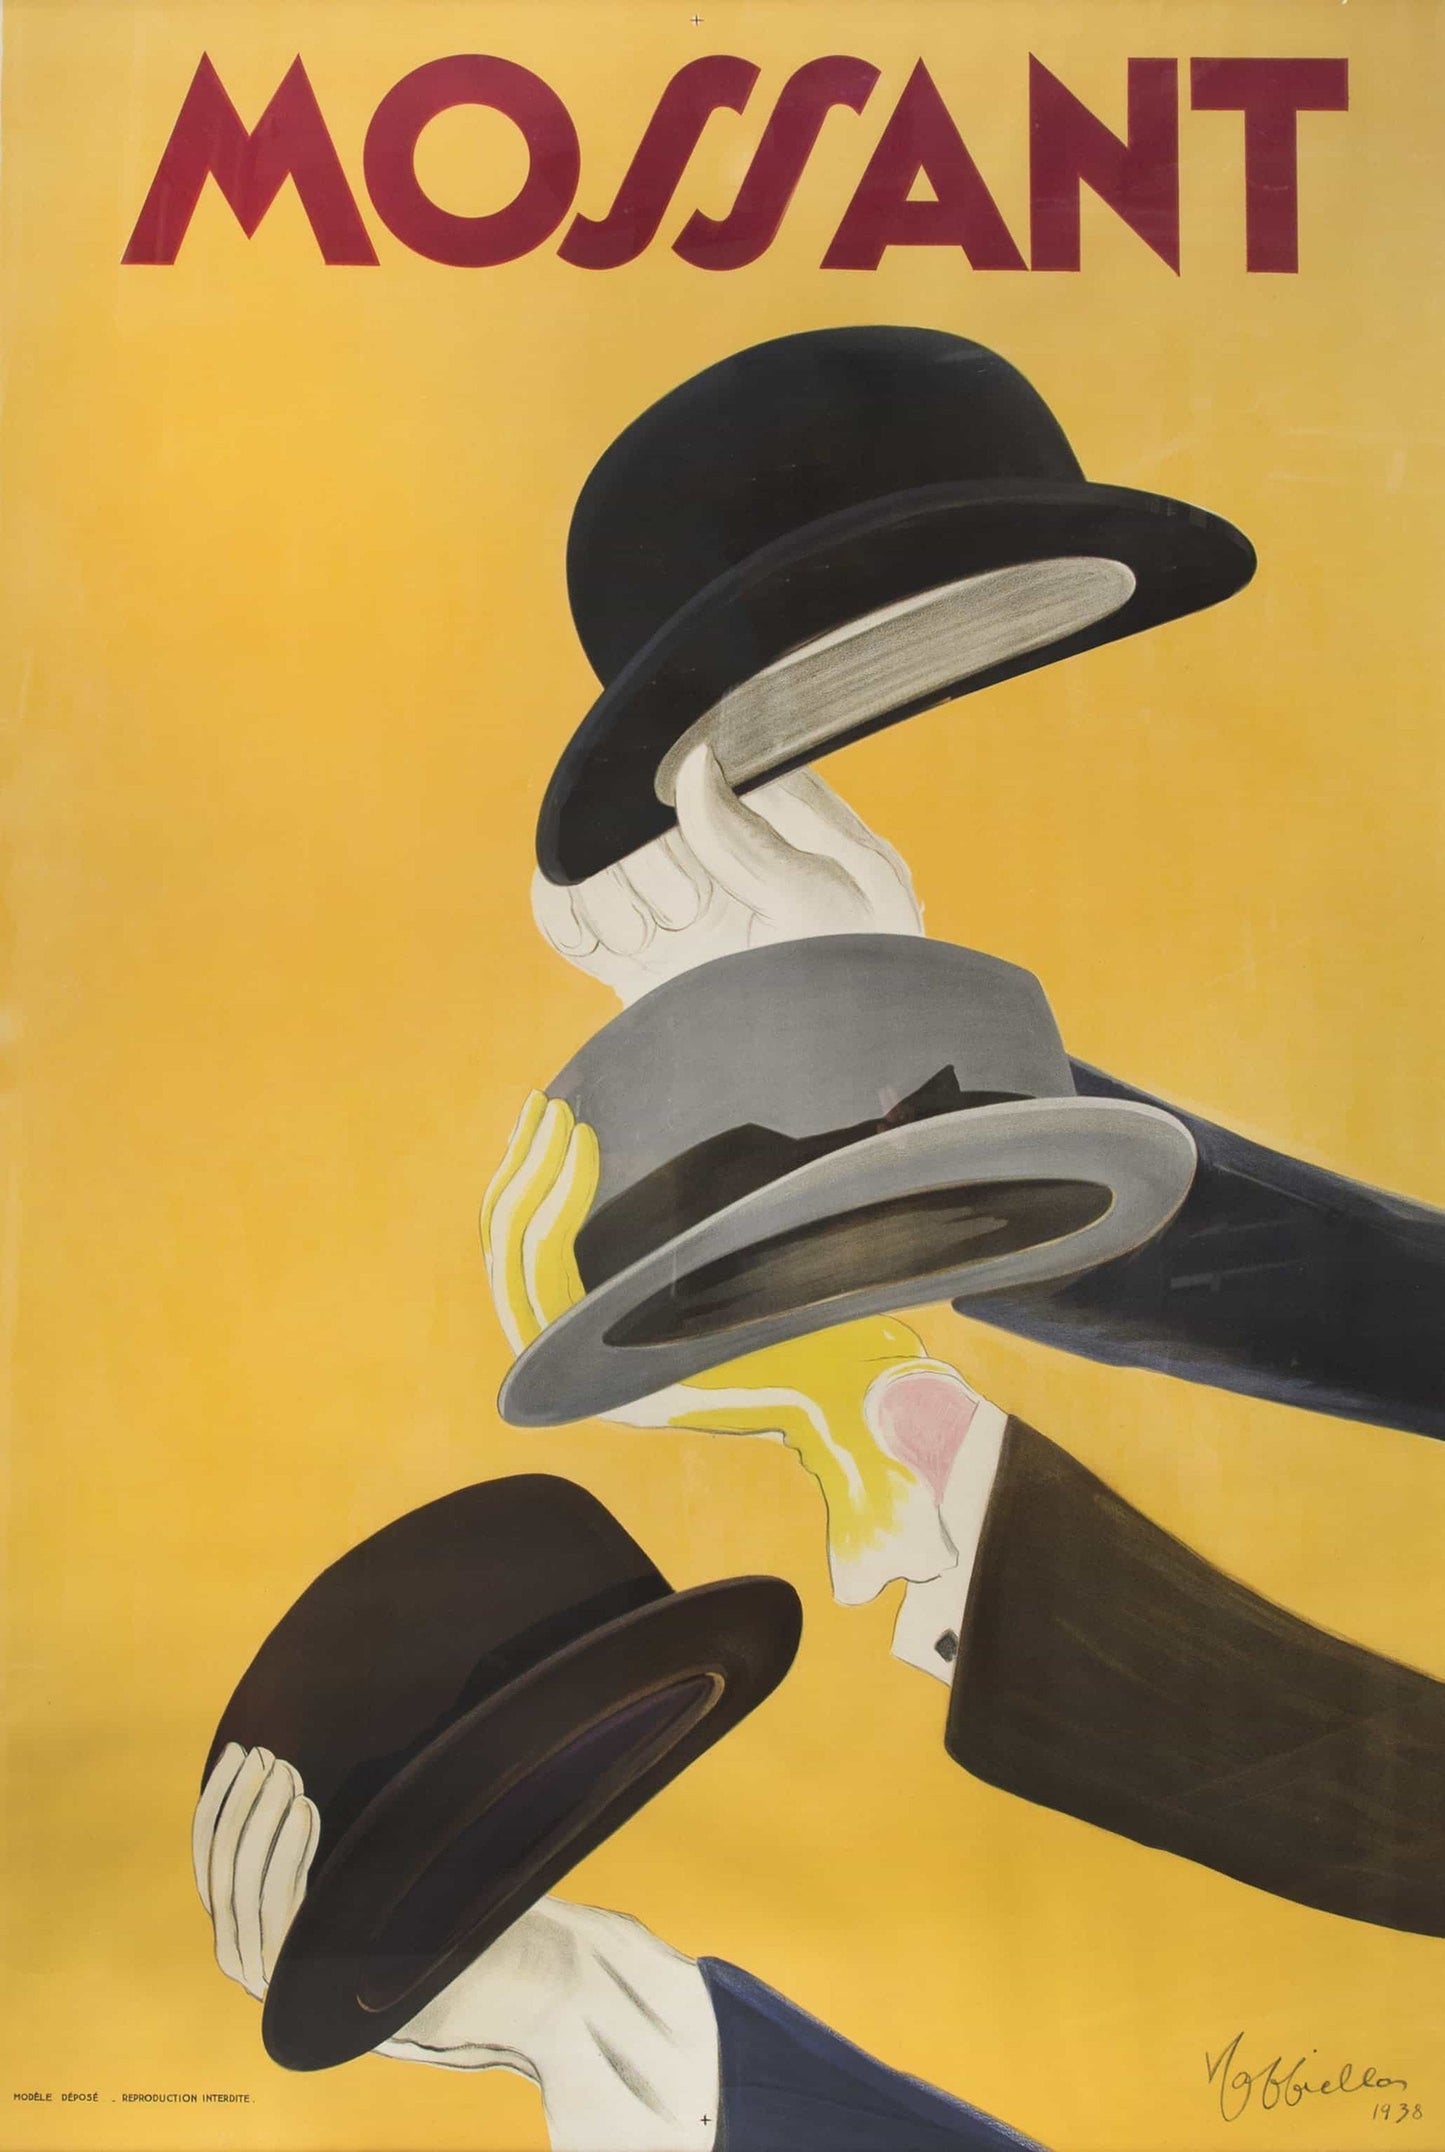 Mossant Hats Poster art print (1938) | Leonetto Cappiello  The Trumpet Shop   